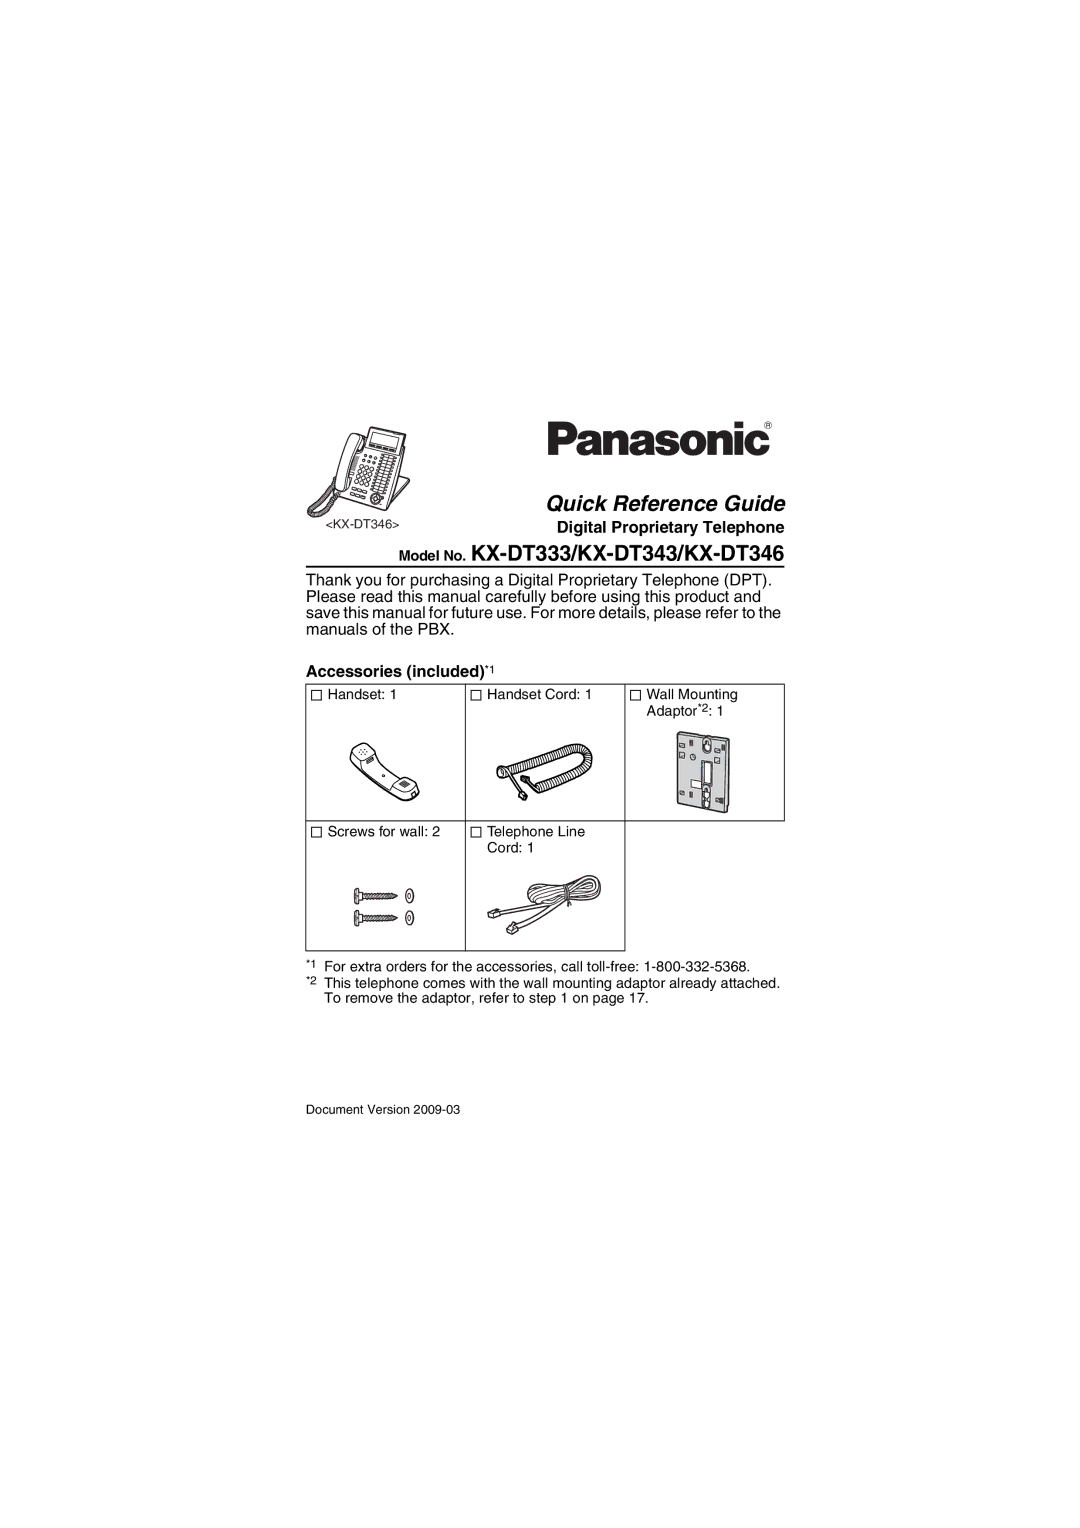 Panasonic KX-DT343, KX-DT346, KX-DT333 manual Digital Proprietary Telephone, Accessories included*1 